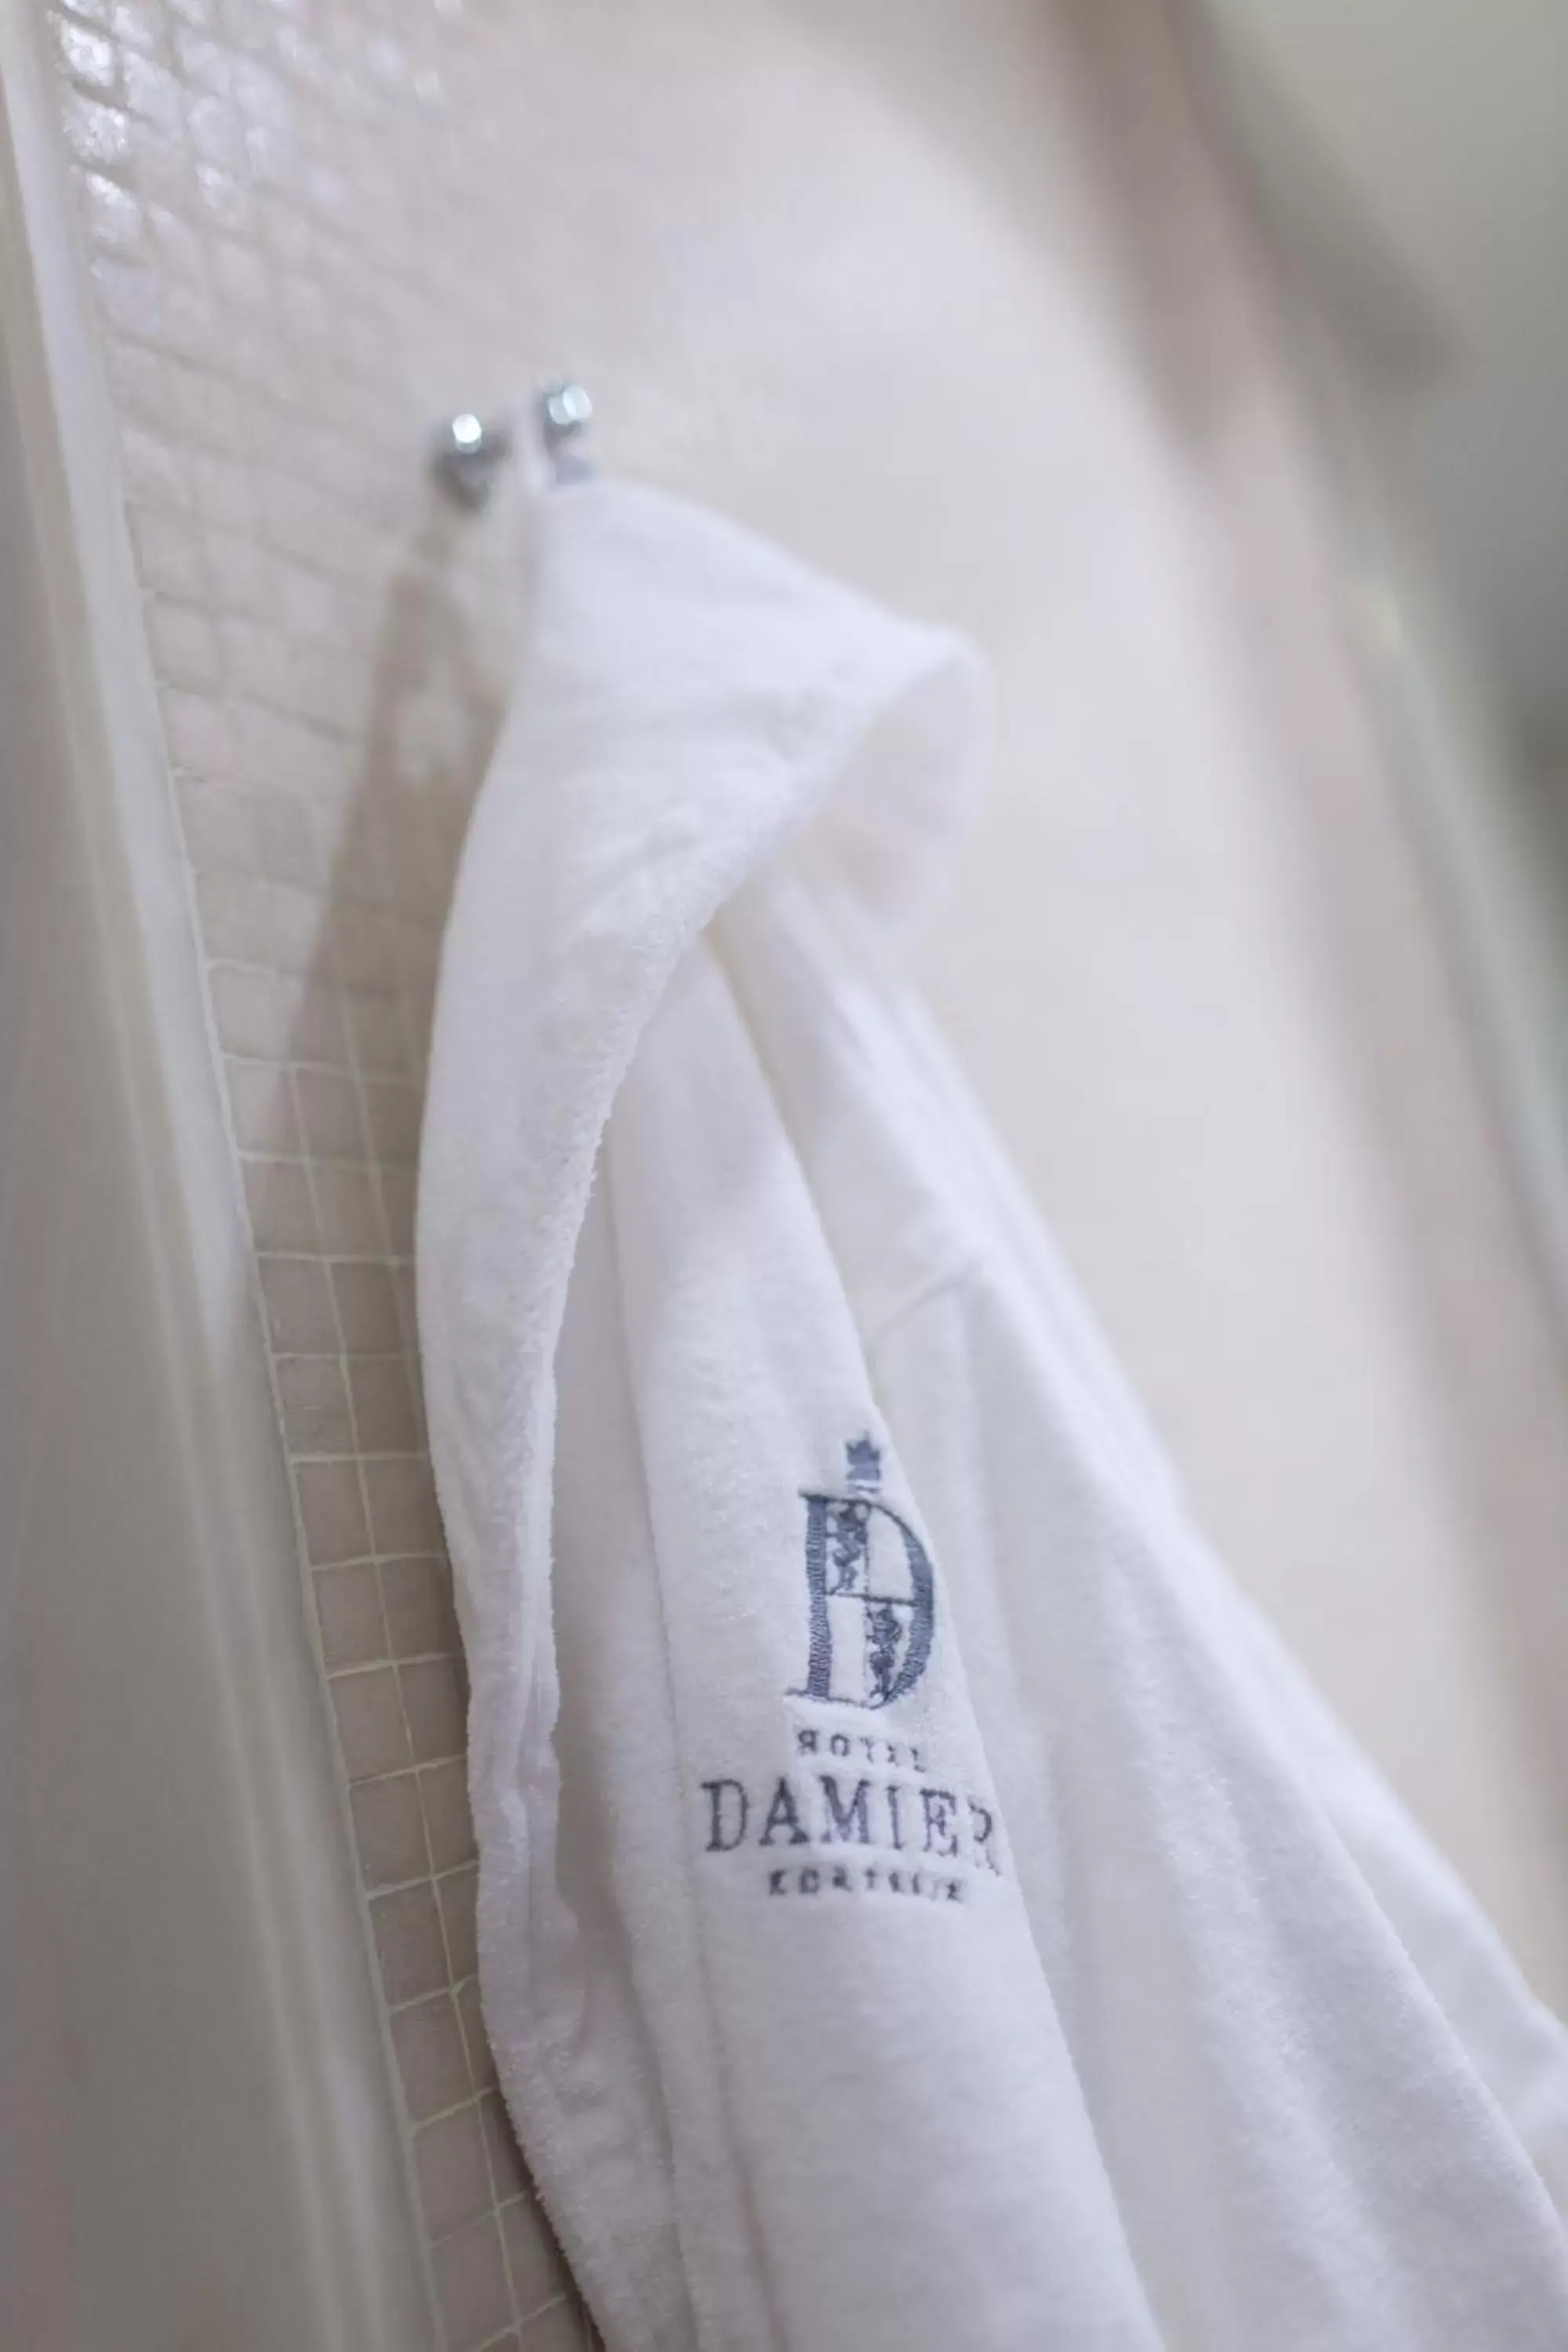 Decorative detail, Bathroom in Hotel Damier Kortrijk